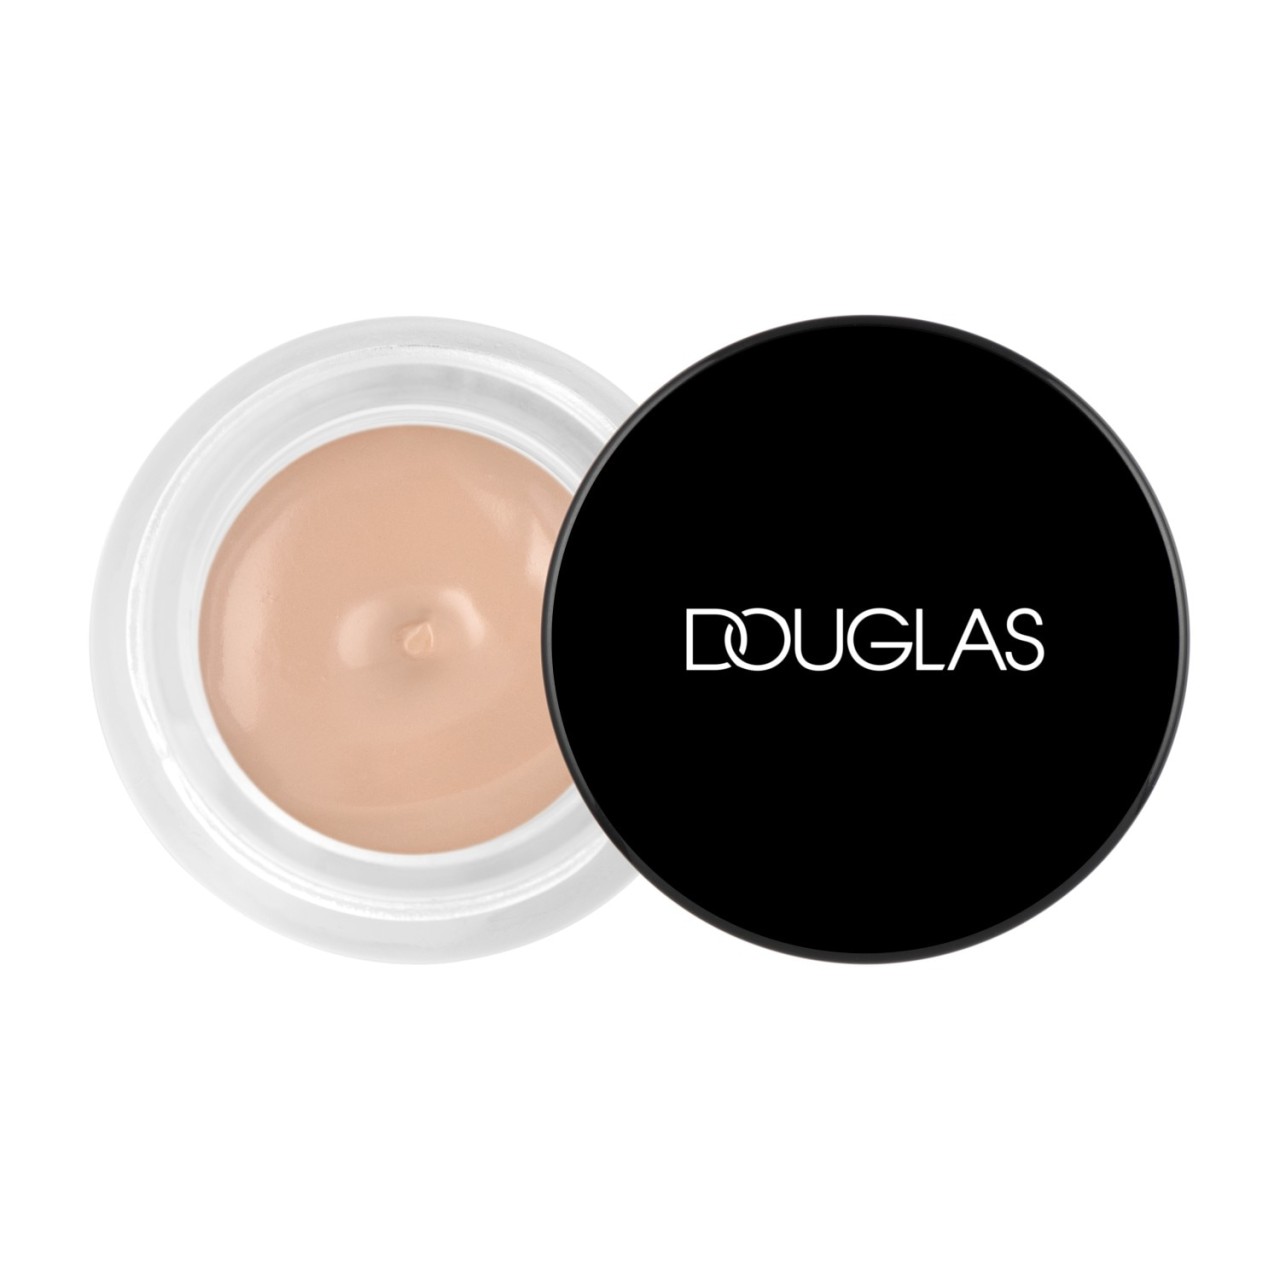 Douglas Collection - Eye Optimizing Full Coverage Concealer -  05 